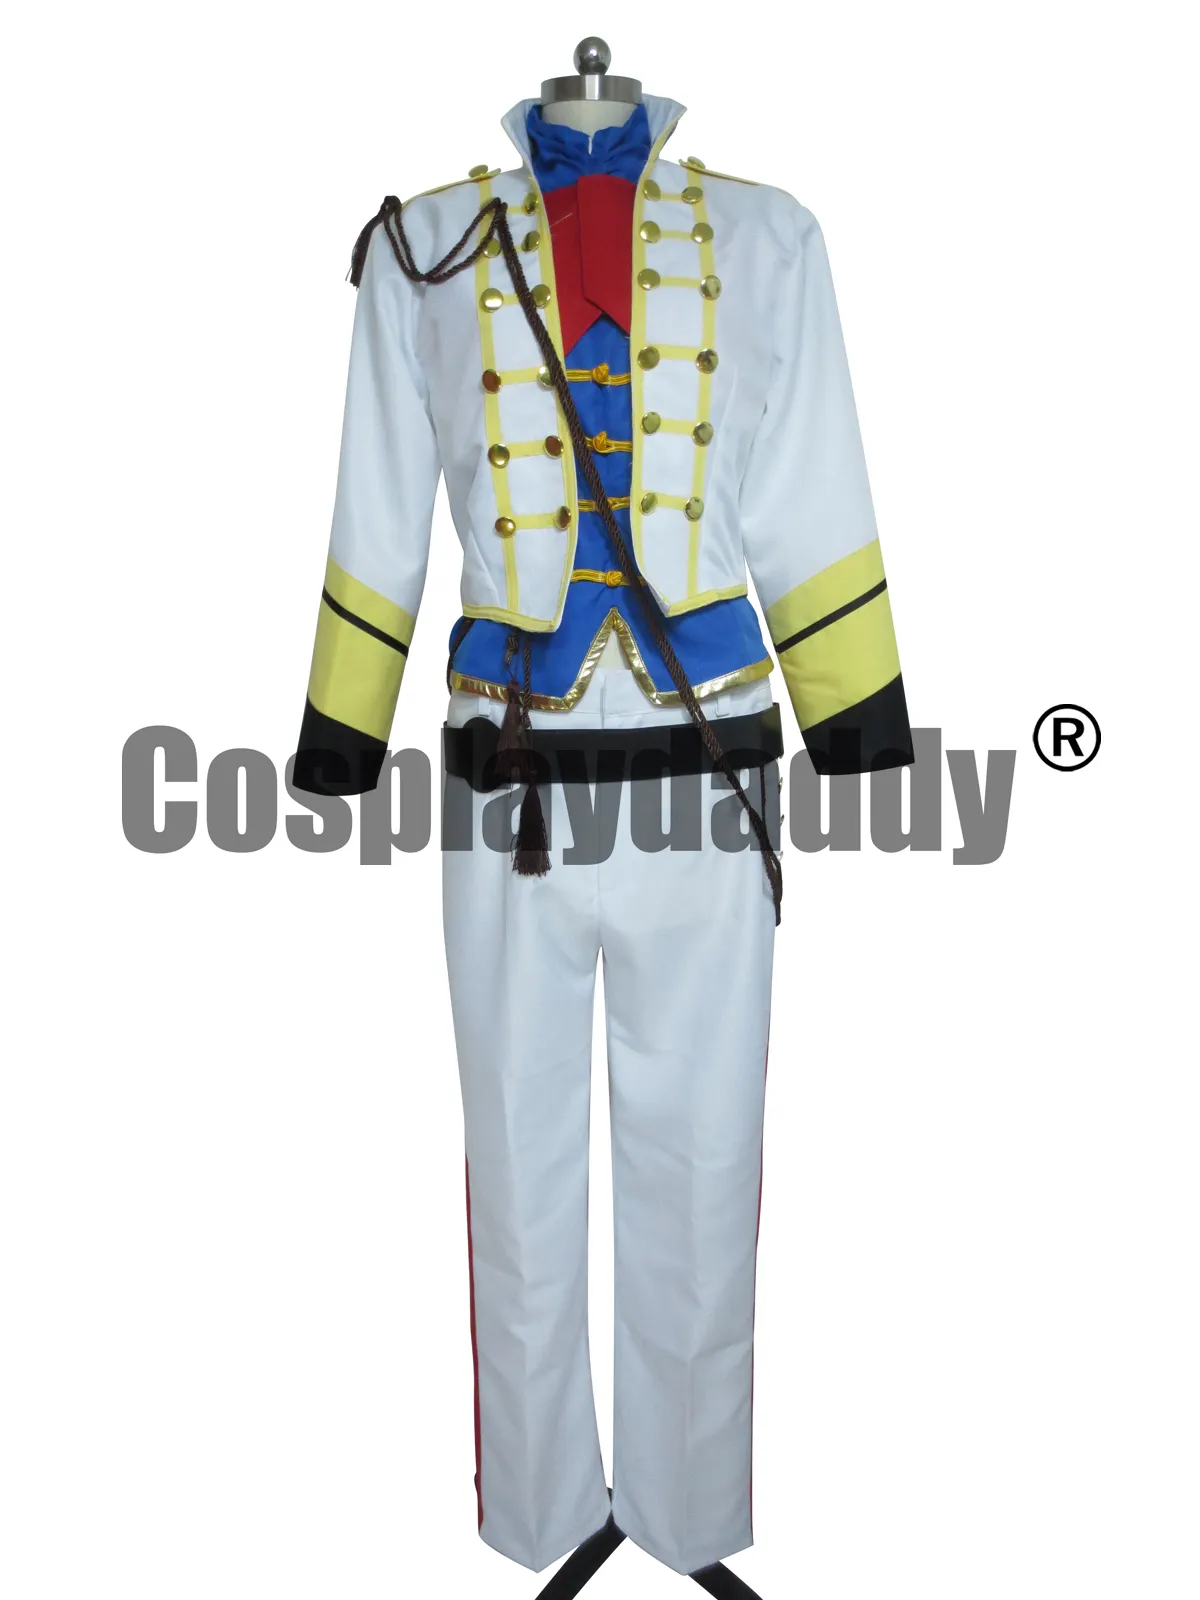 Abito uniforme del costume cosplay di Code Geass Kururugi Suzaku